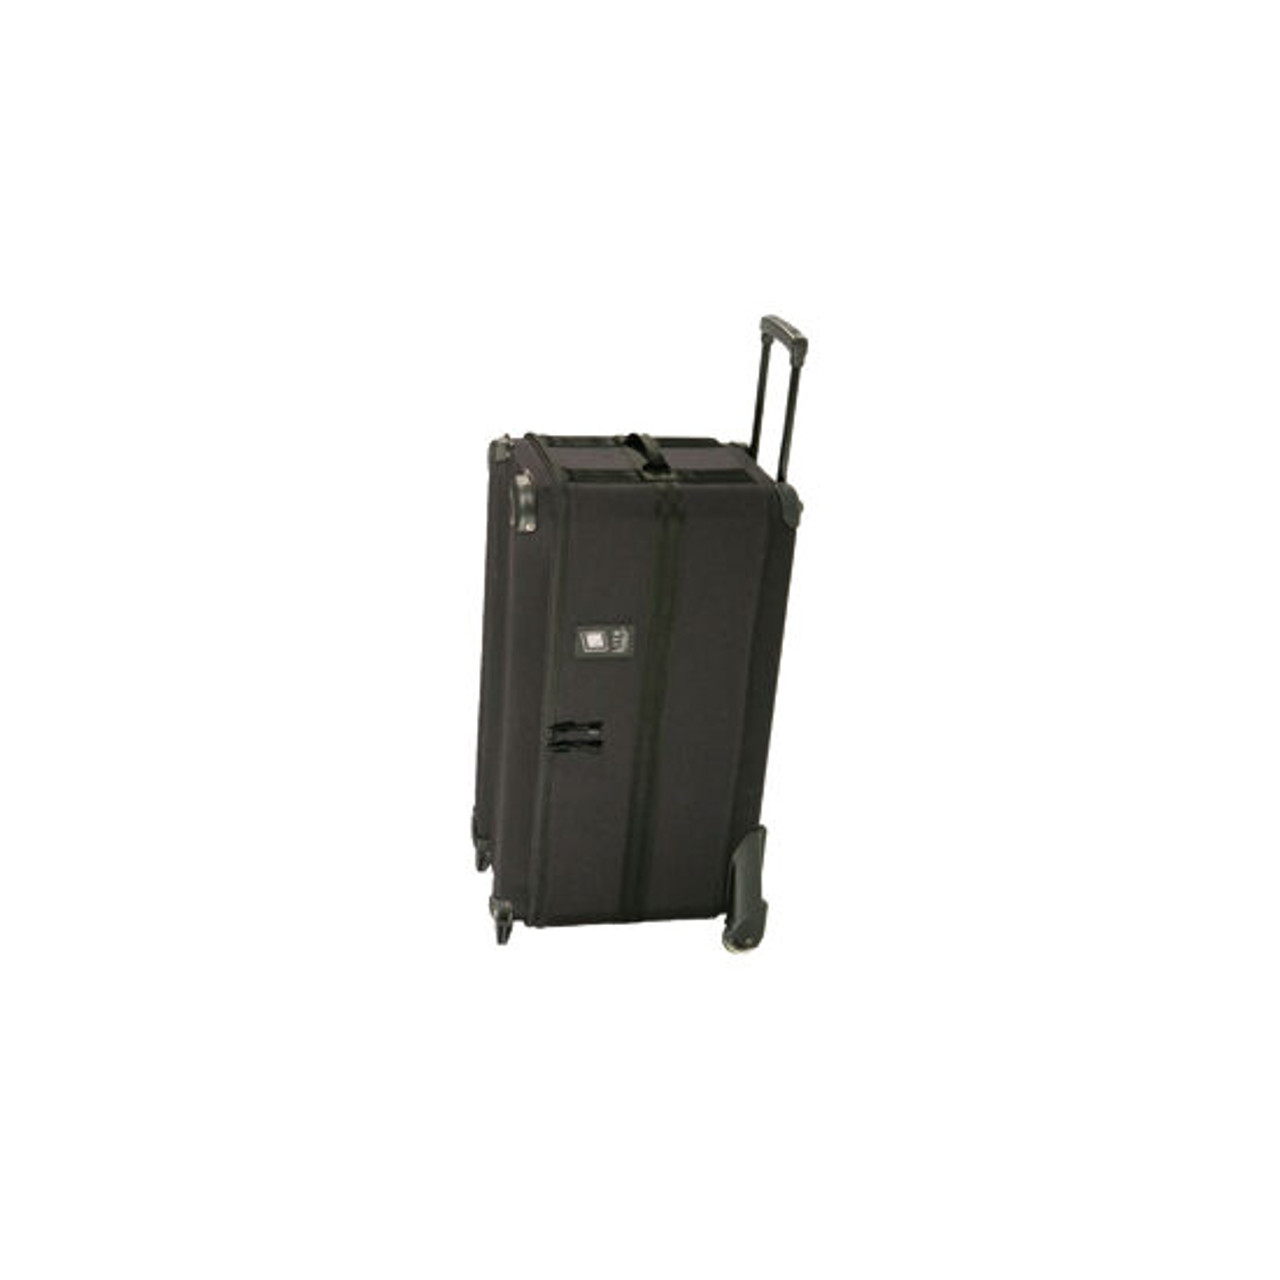 Litepanels 900-3025 1x1 4-Lite Carrying Case